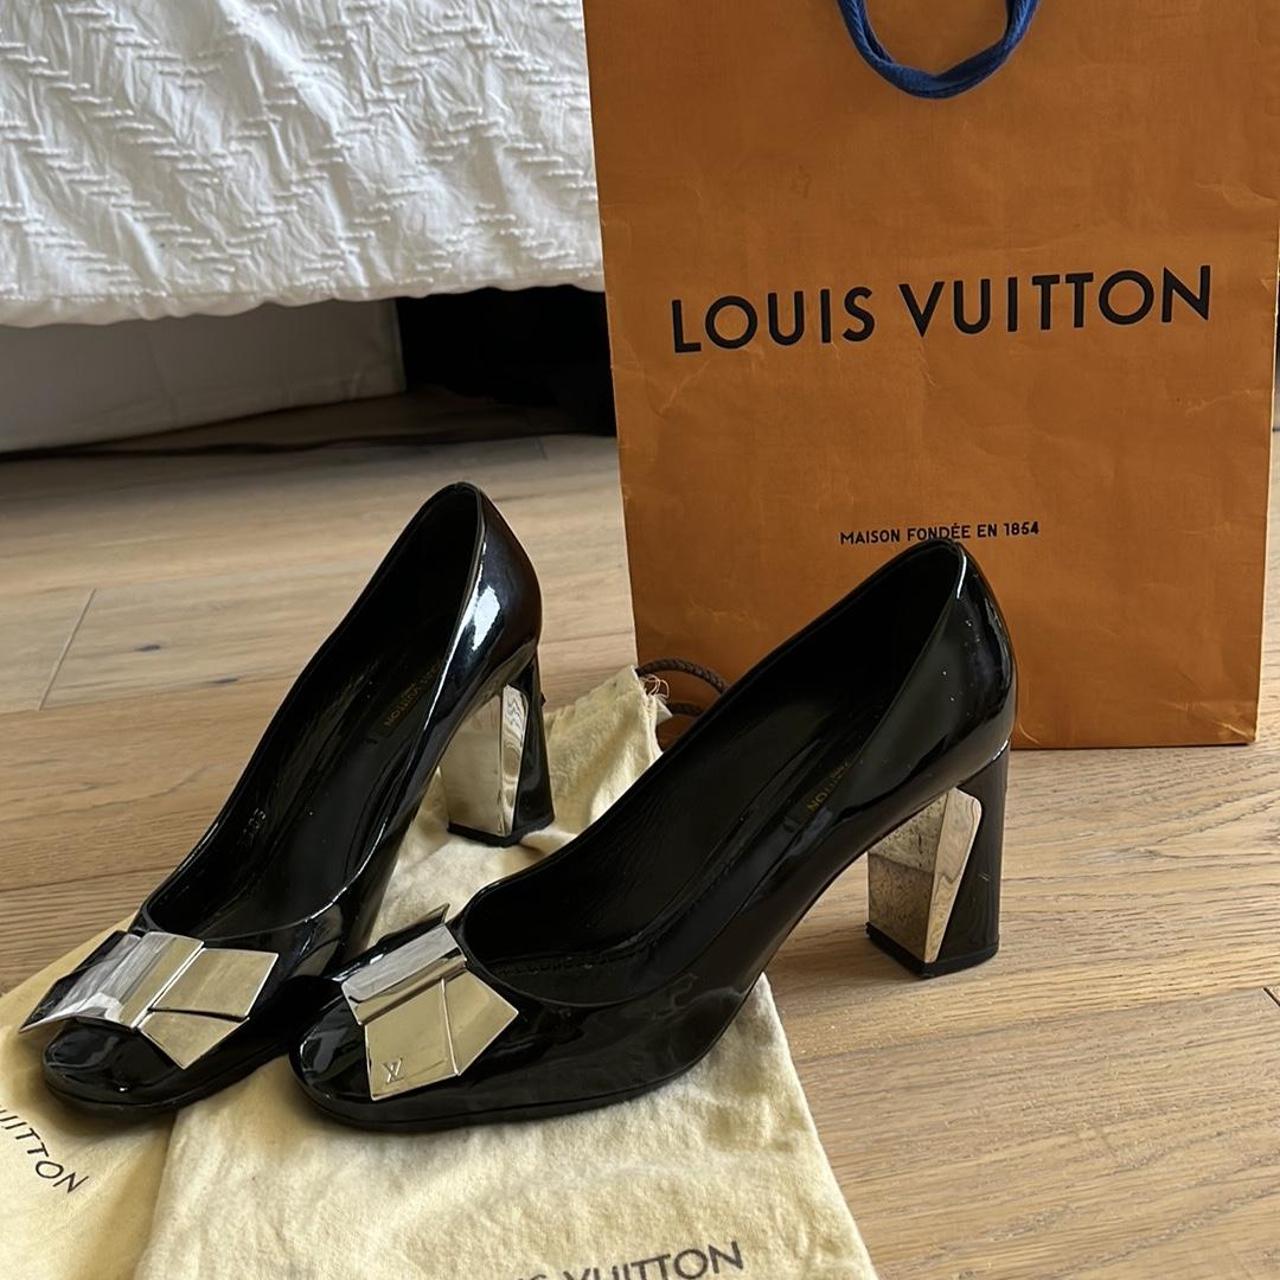 Vintage Louis Vuitton black heels  Louis vuitton shoes heels, Heels, Louis  vuitton handbags